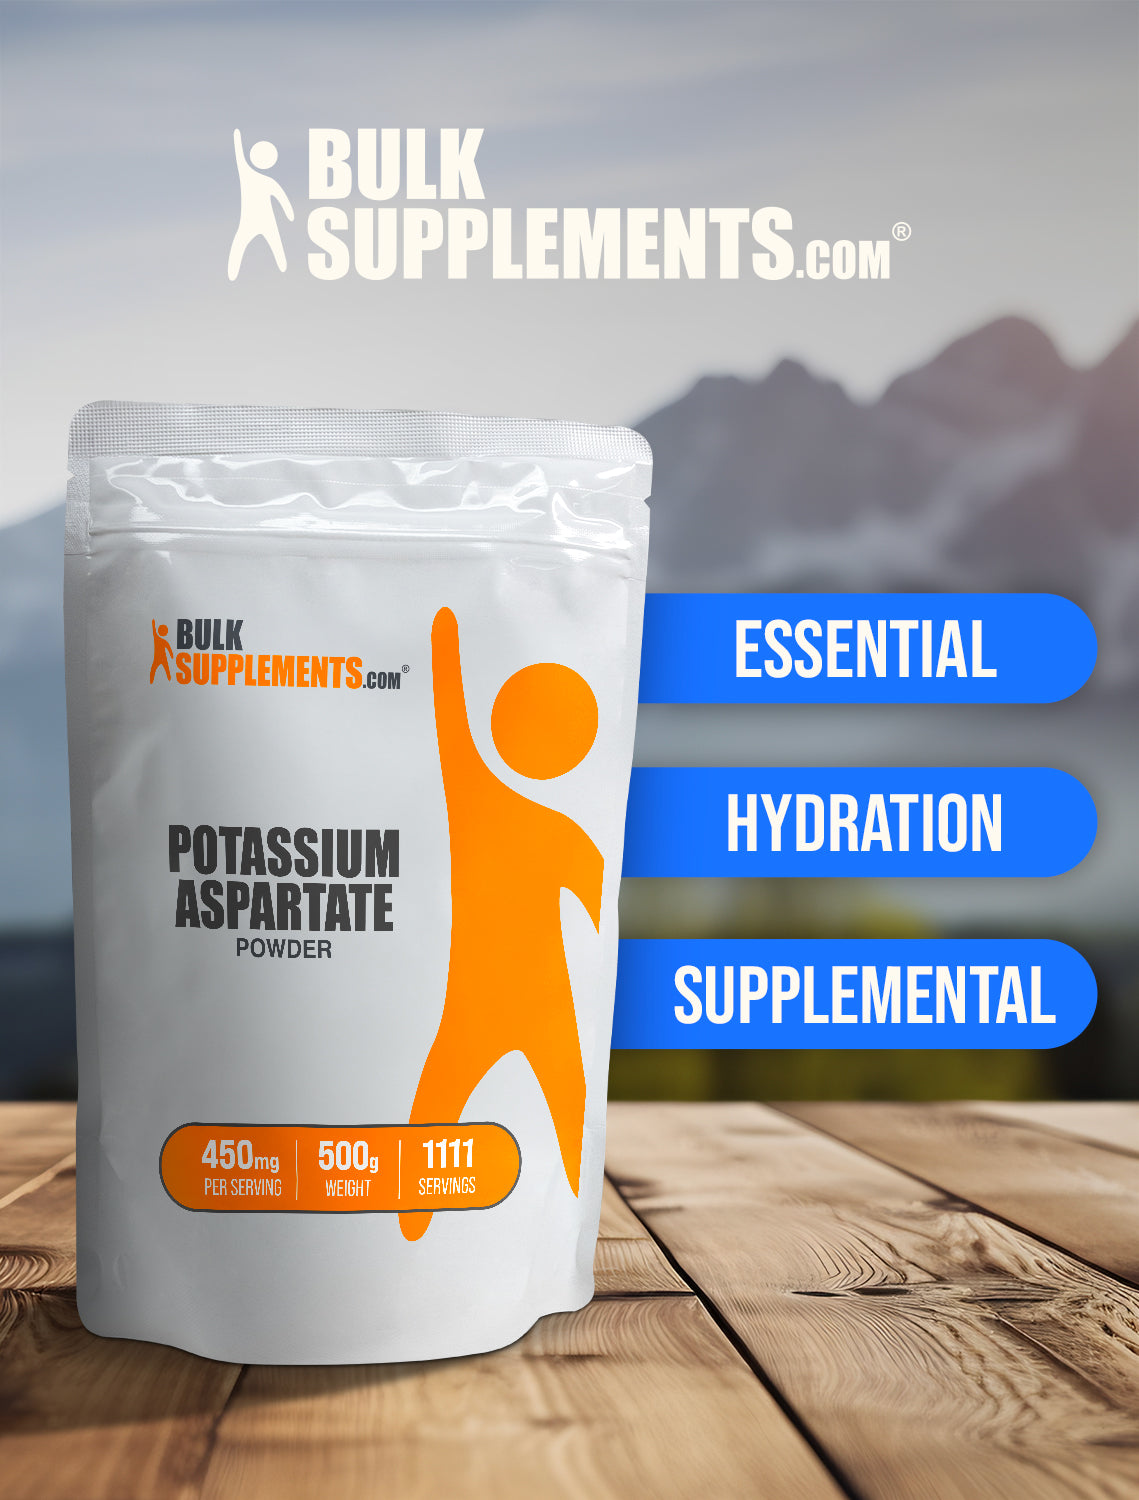 Potassium Aspartate powder keyword image 500g